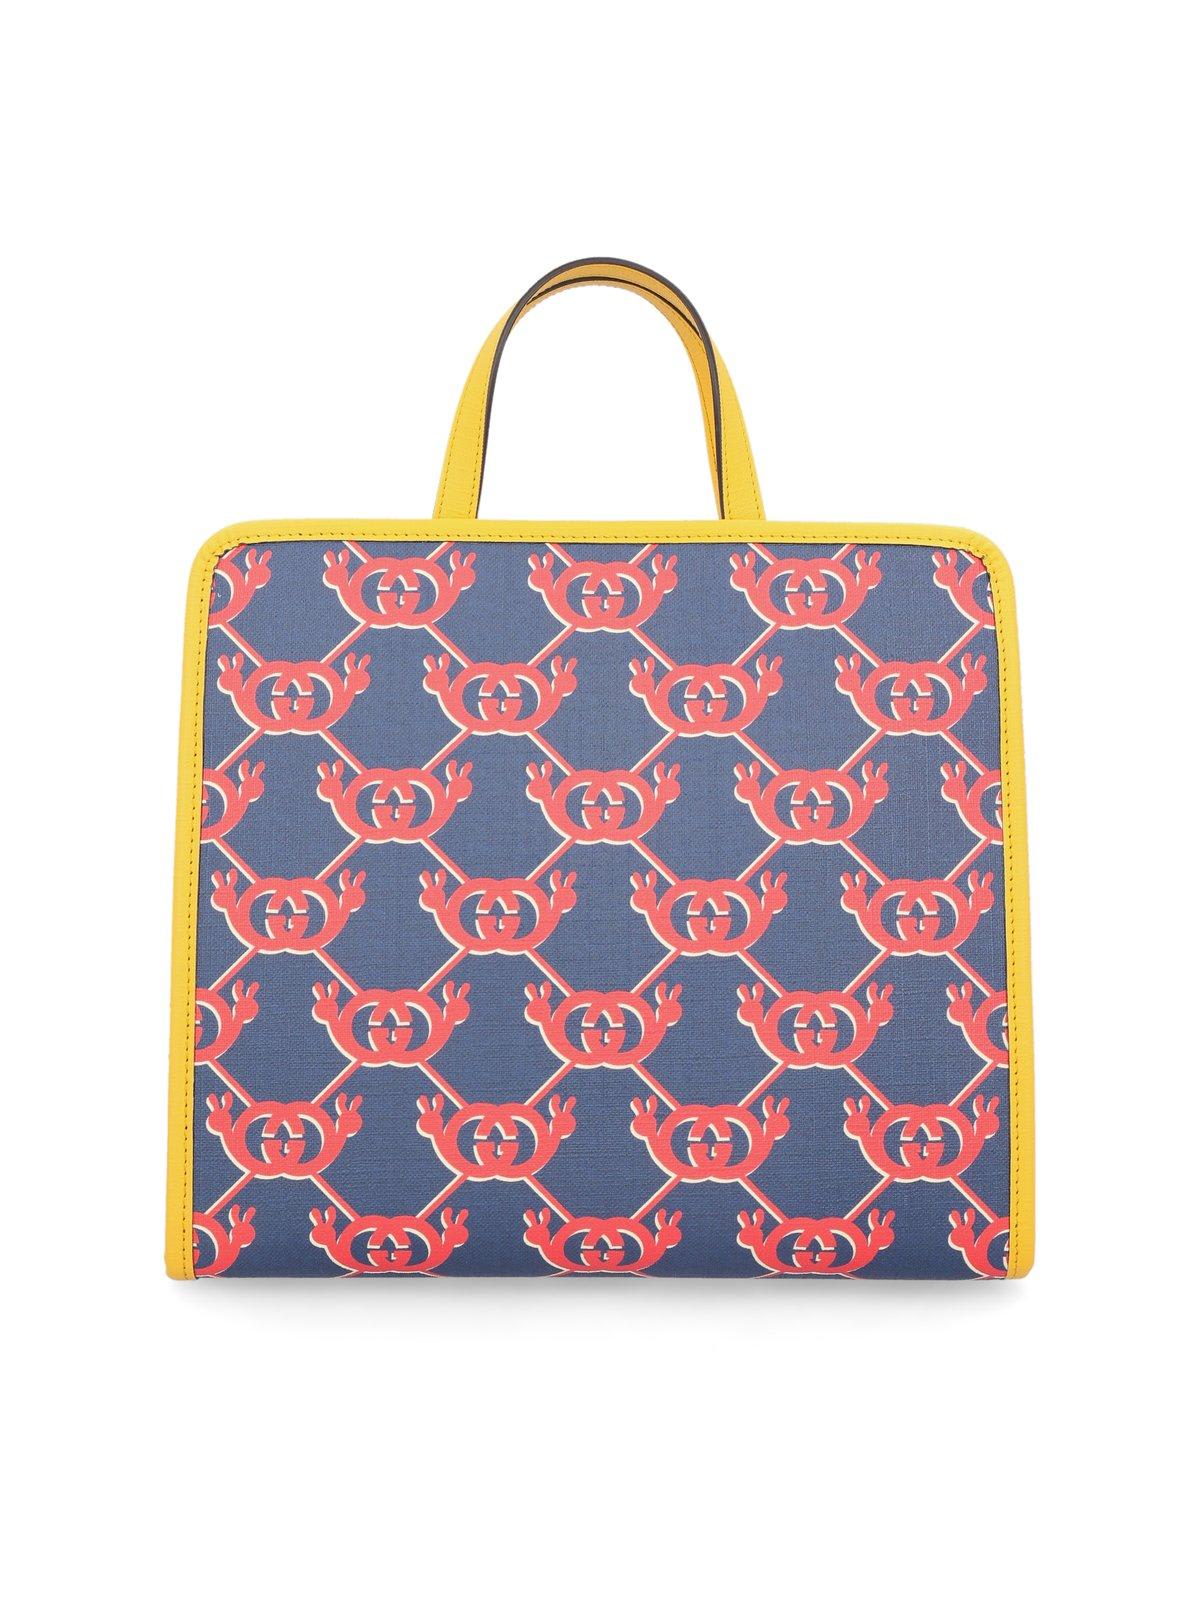 Gucci All-over Logo Printed Tote Bag